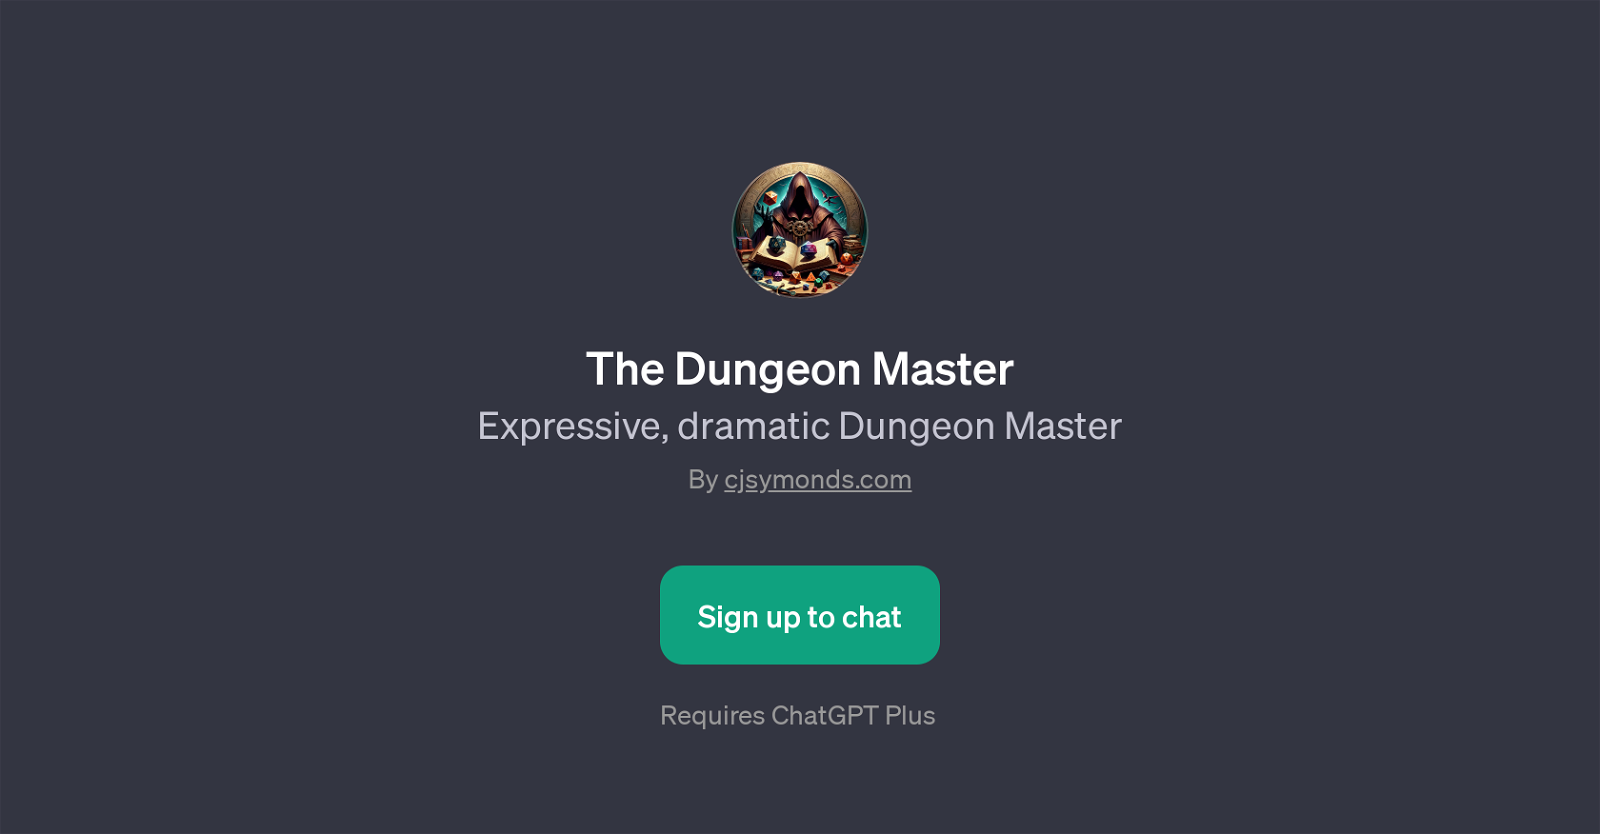 The Dungeon Master website